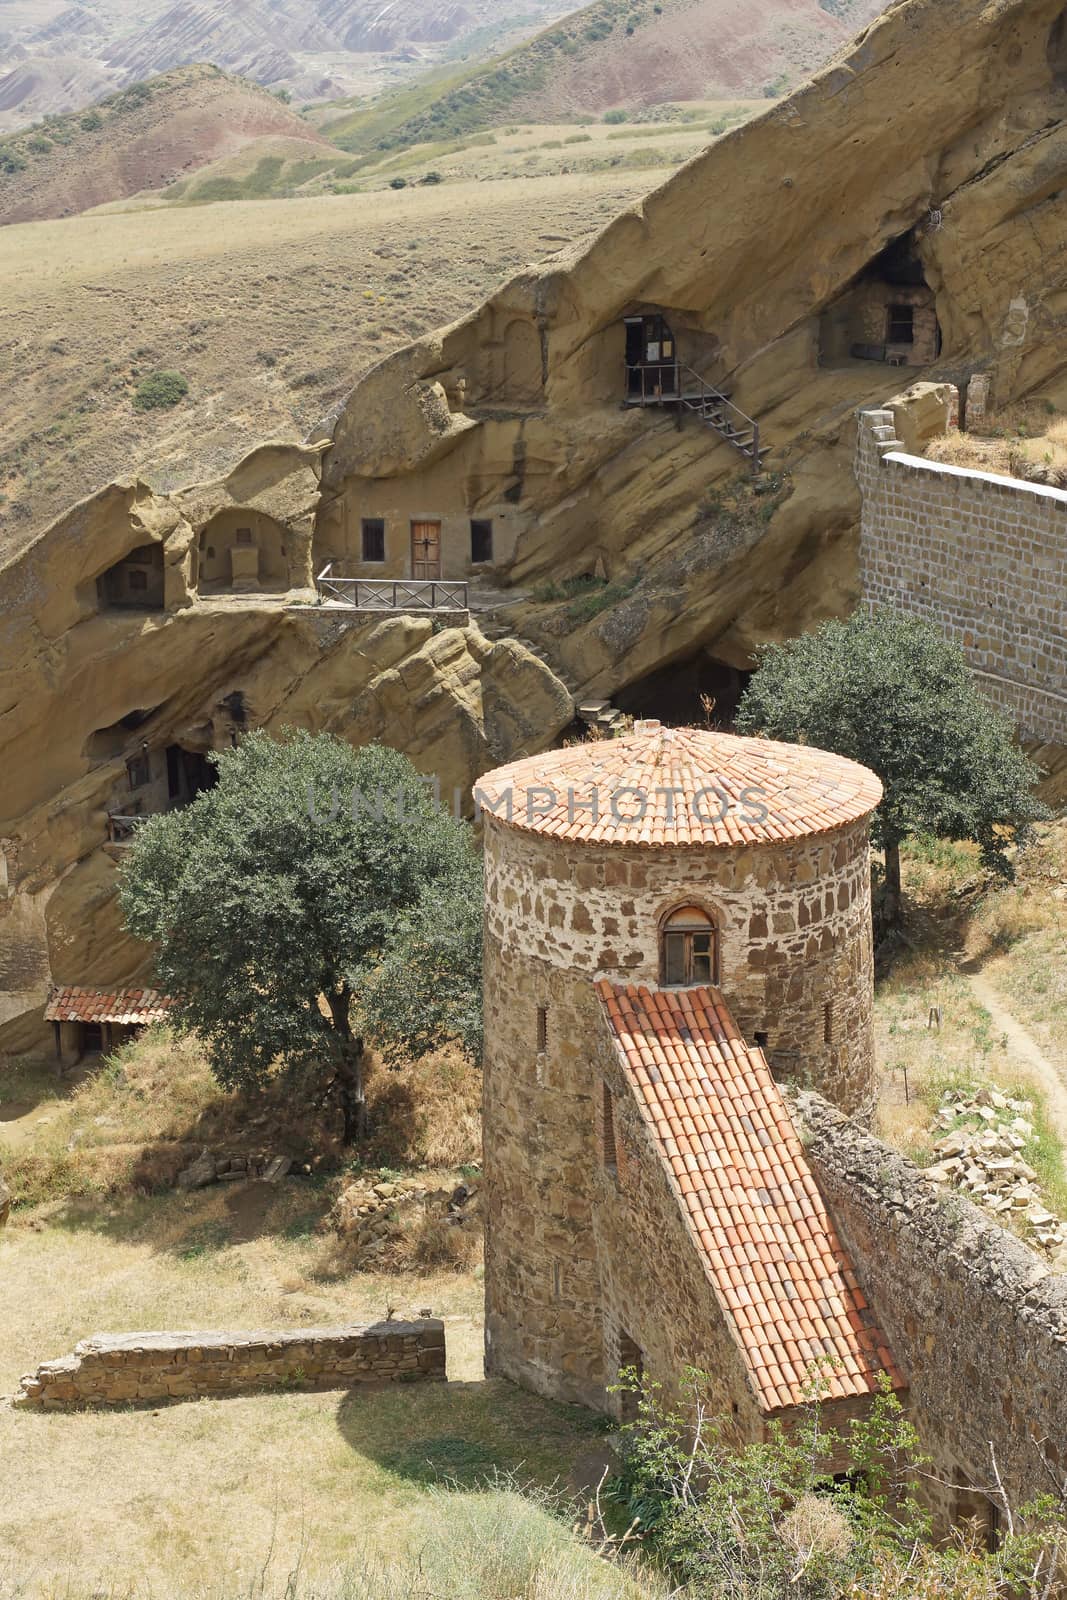 DAVID GAREDJI, GEORGIA - JULY 3, 2014: Panorama of the Cave Monastery David Garedji, one of the highlights of Kakheti on July 3, 2014 in Georgia, Europe